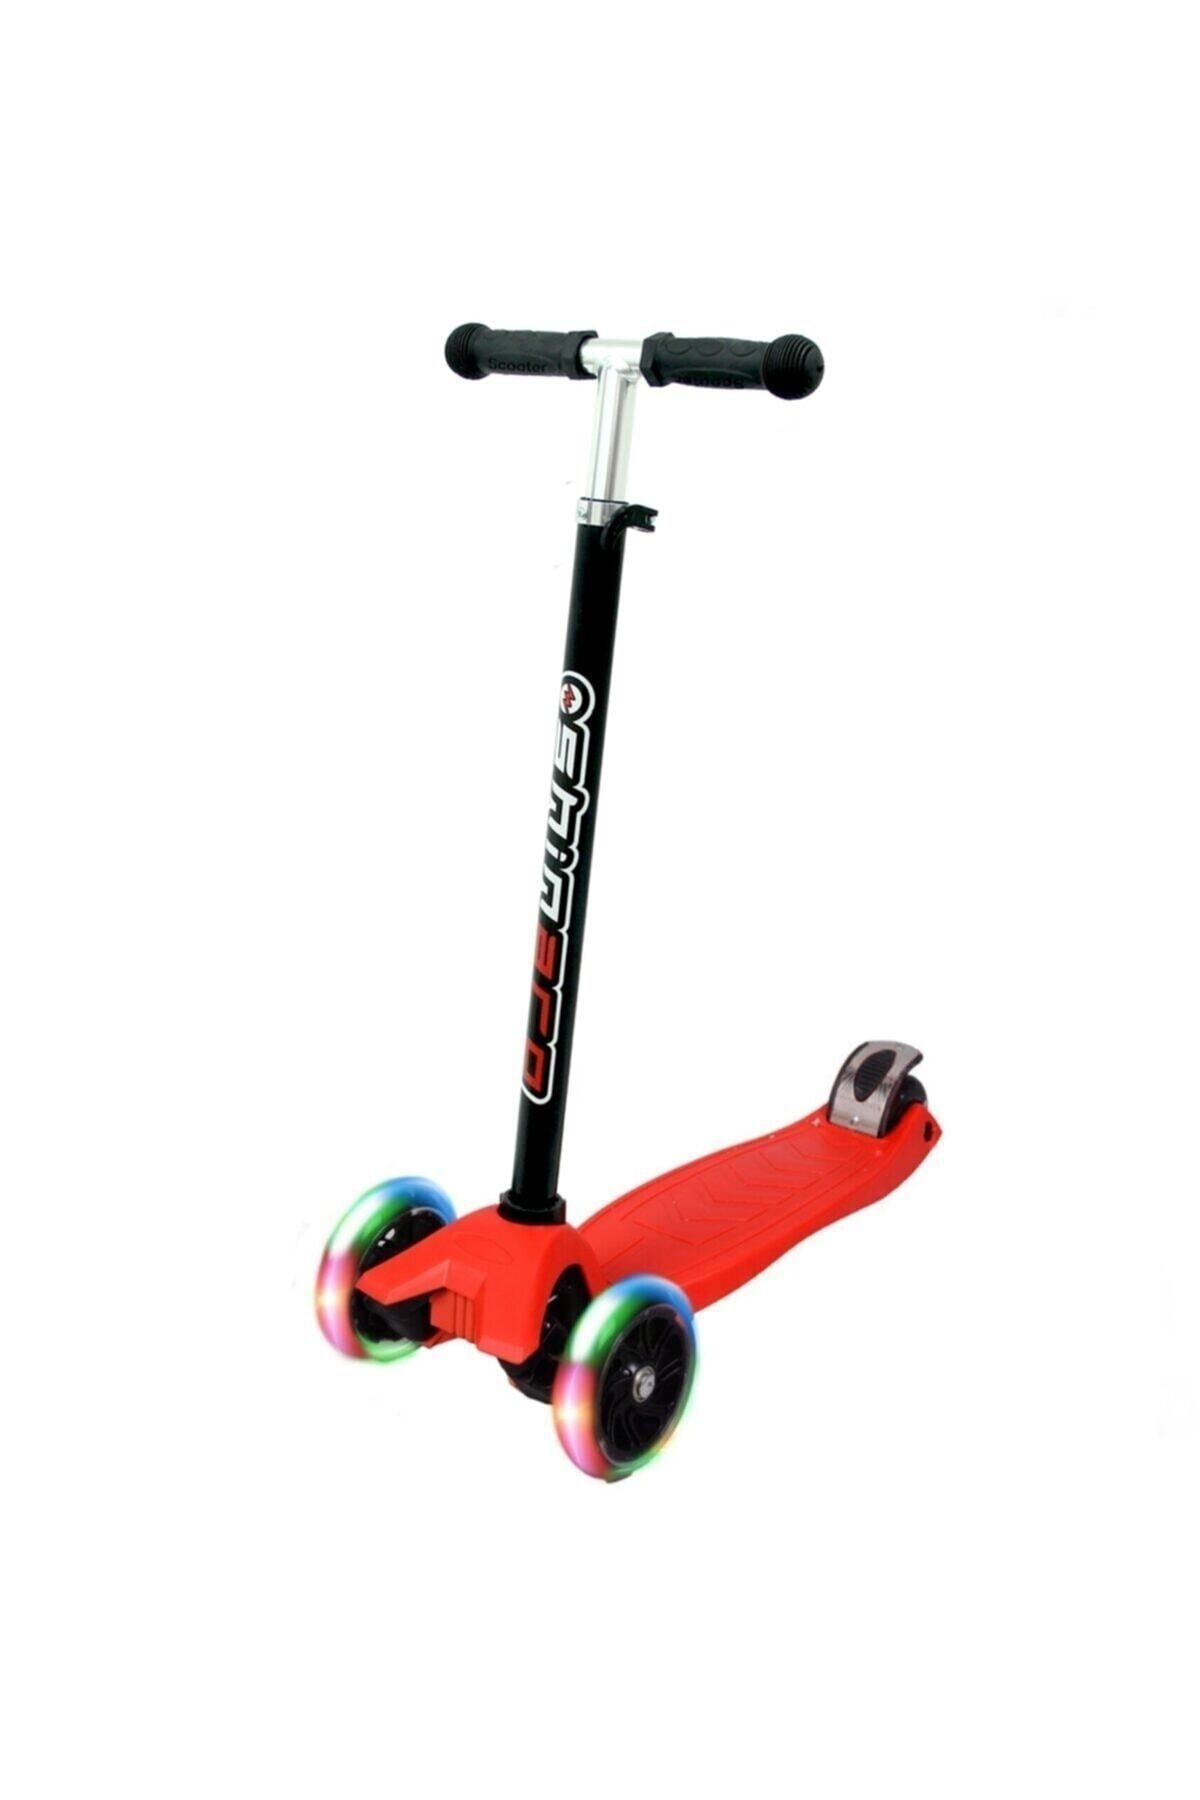 GÜVEN Maxi Twister Kırmızı Yeni Nesil Scooter